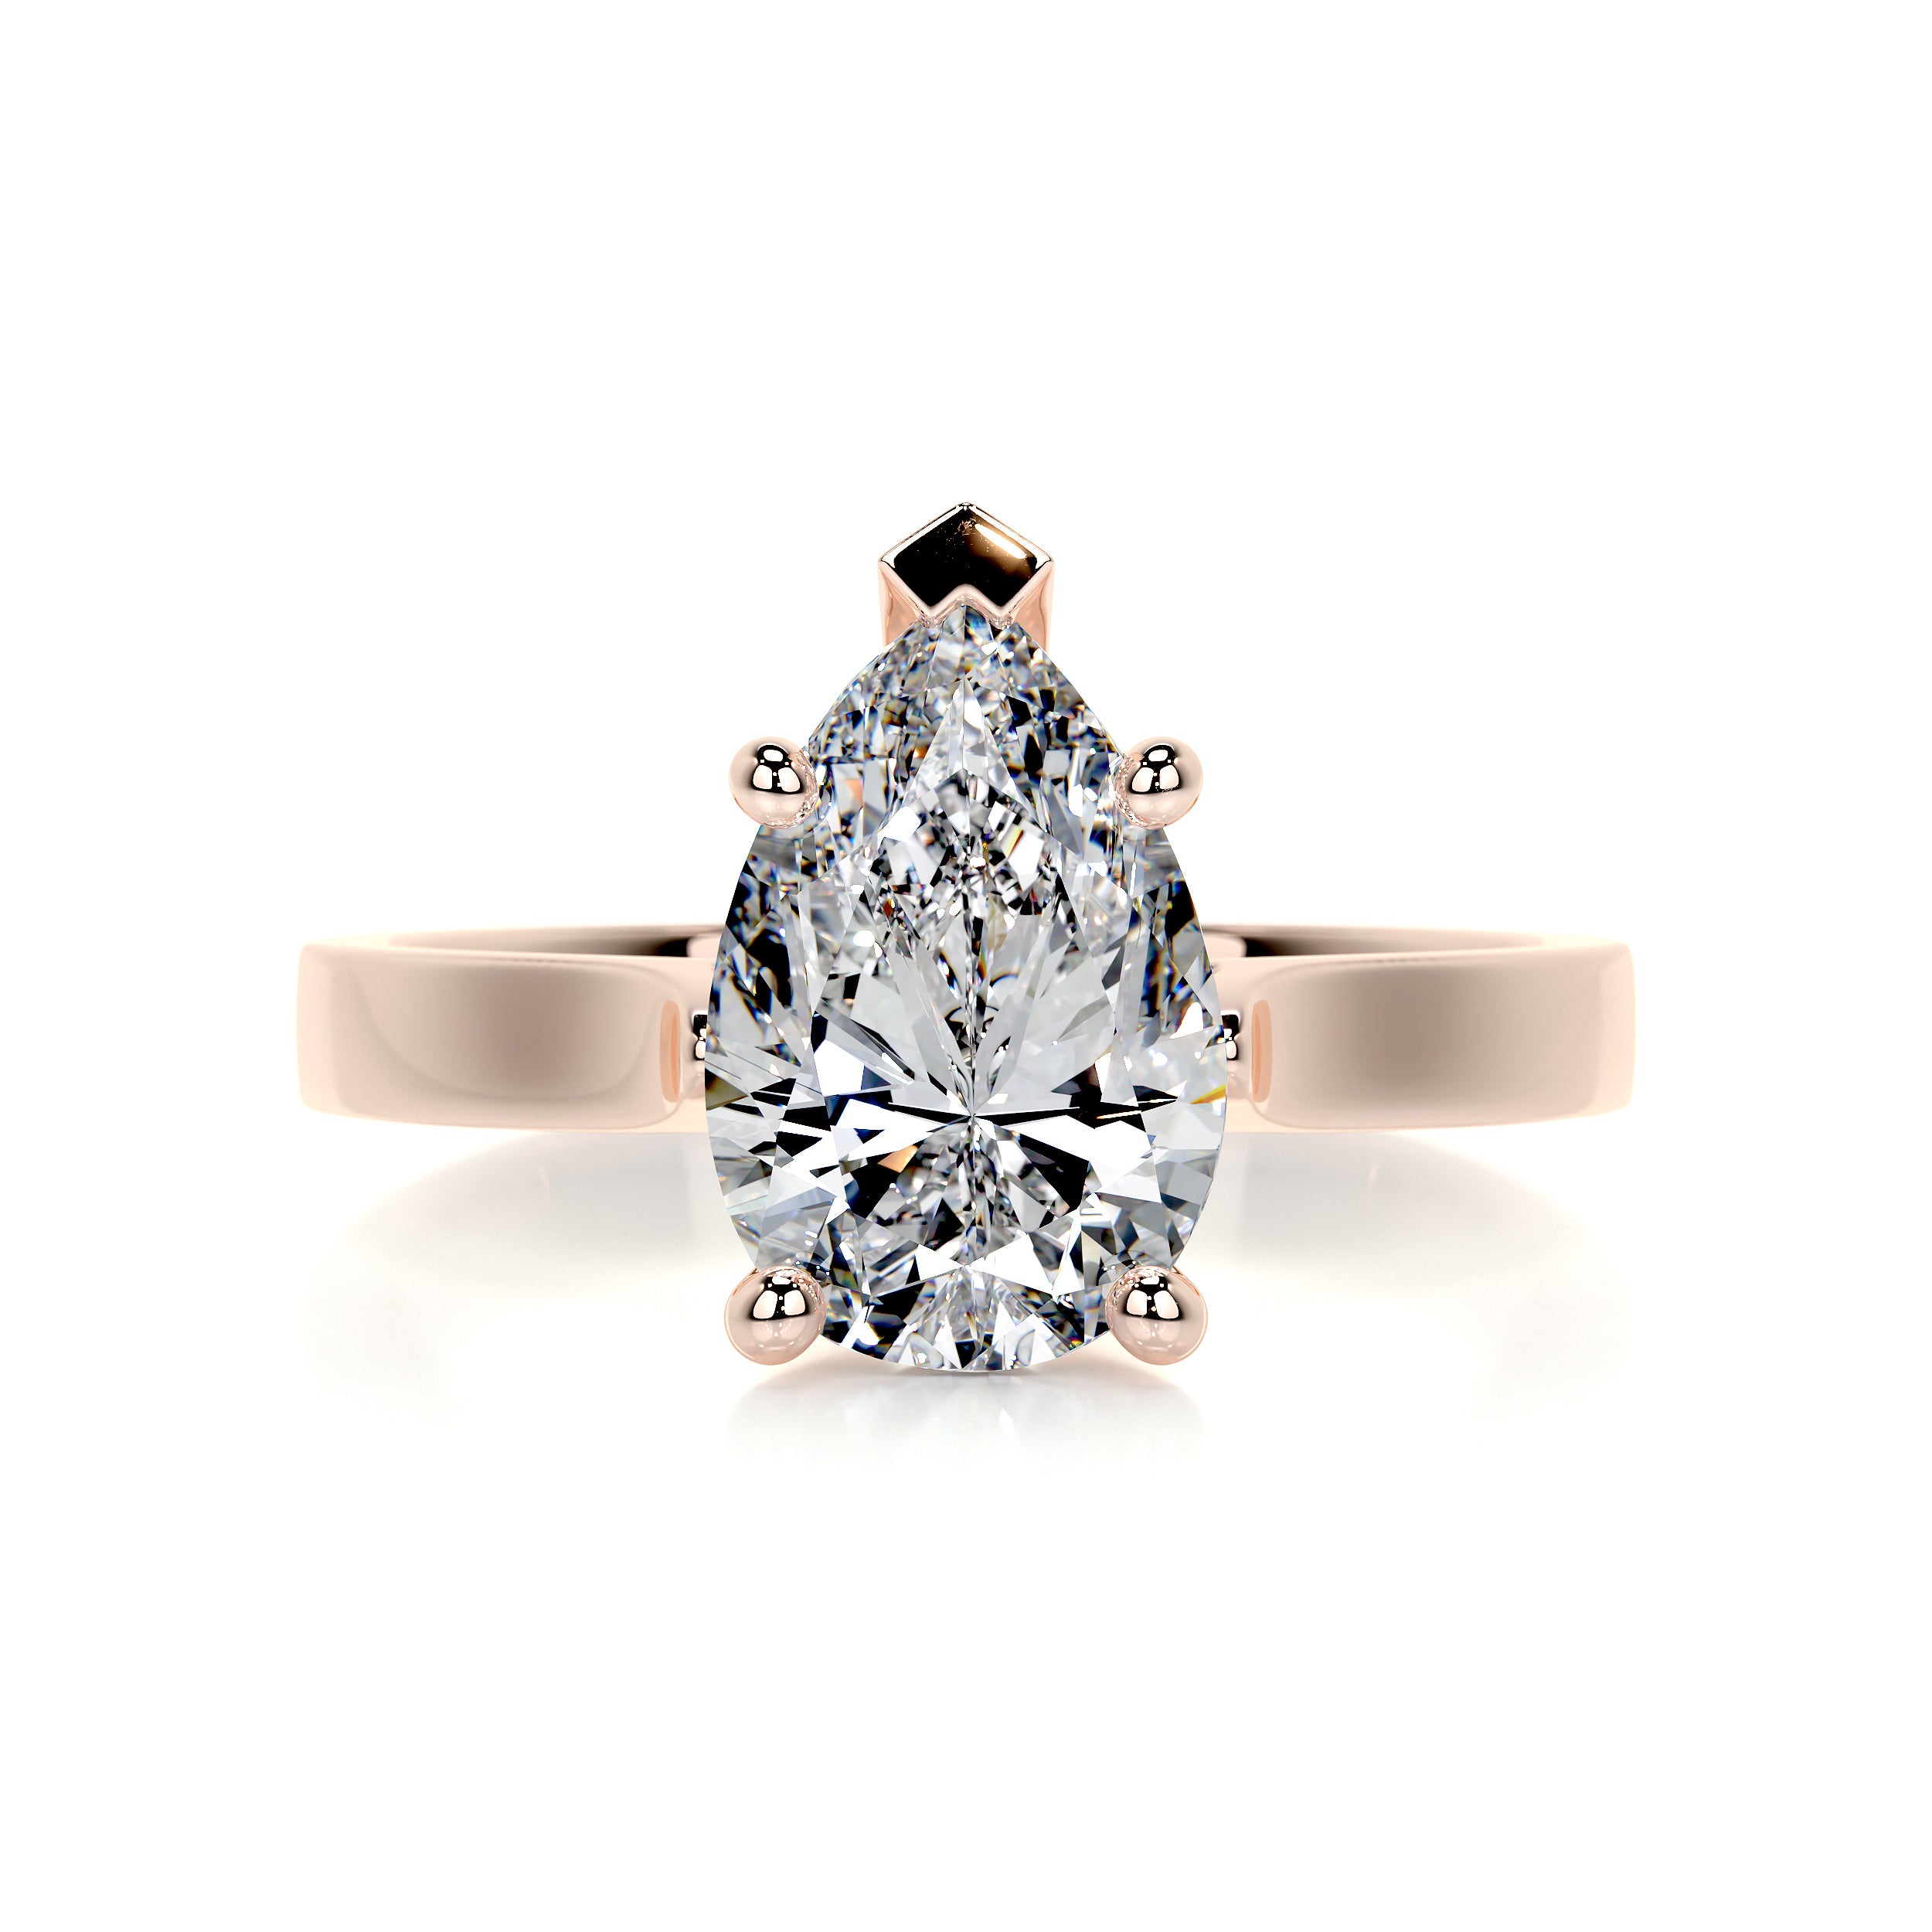 Jessica Diamond Engagement Ring   (2 Carat) -14K Rose Gold